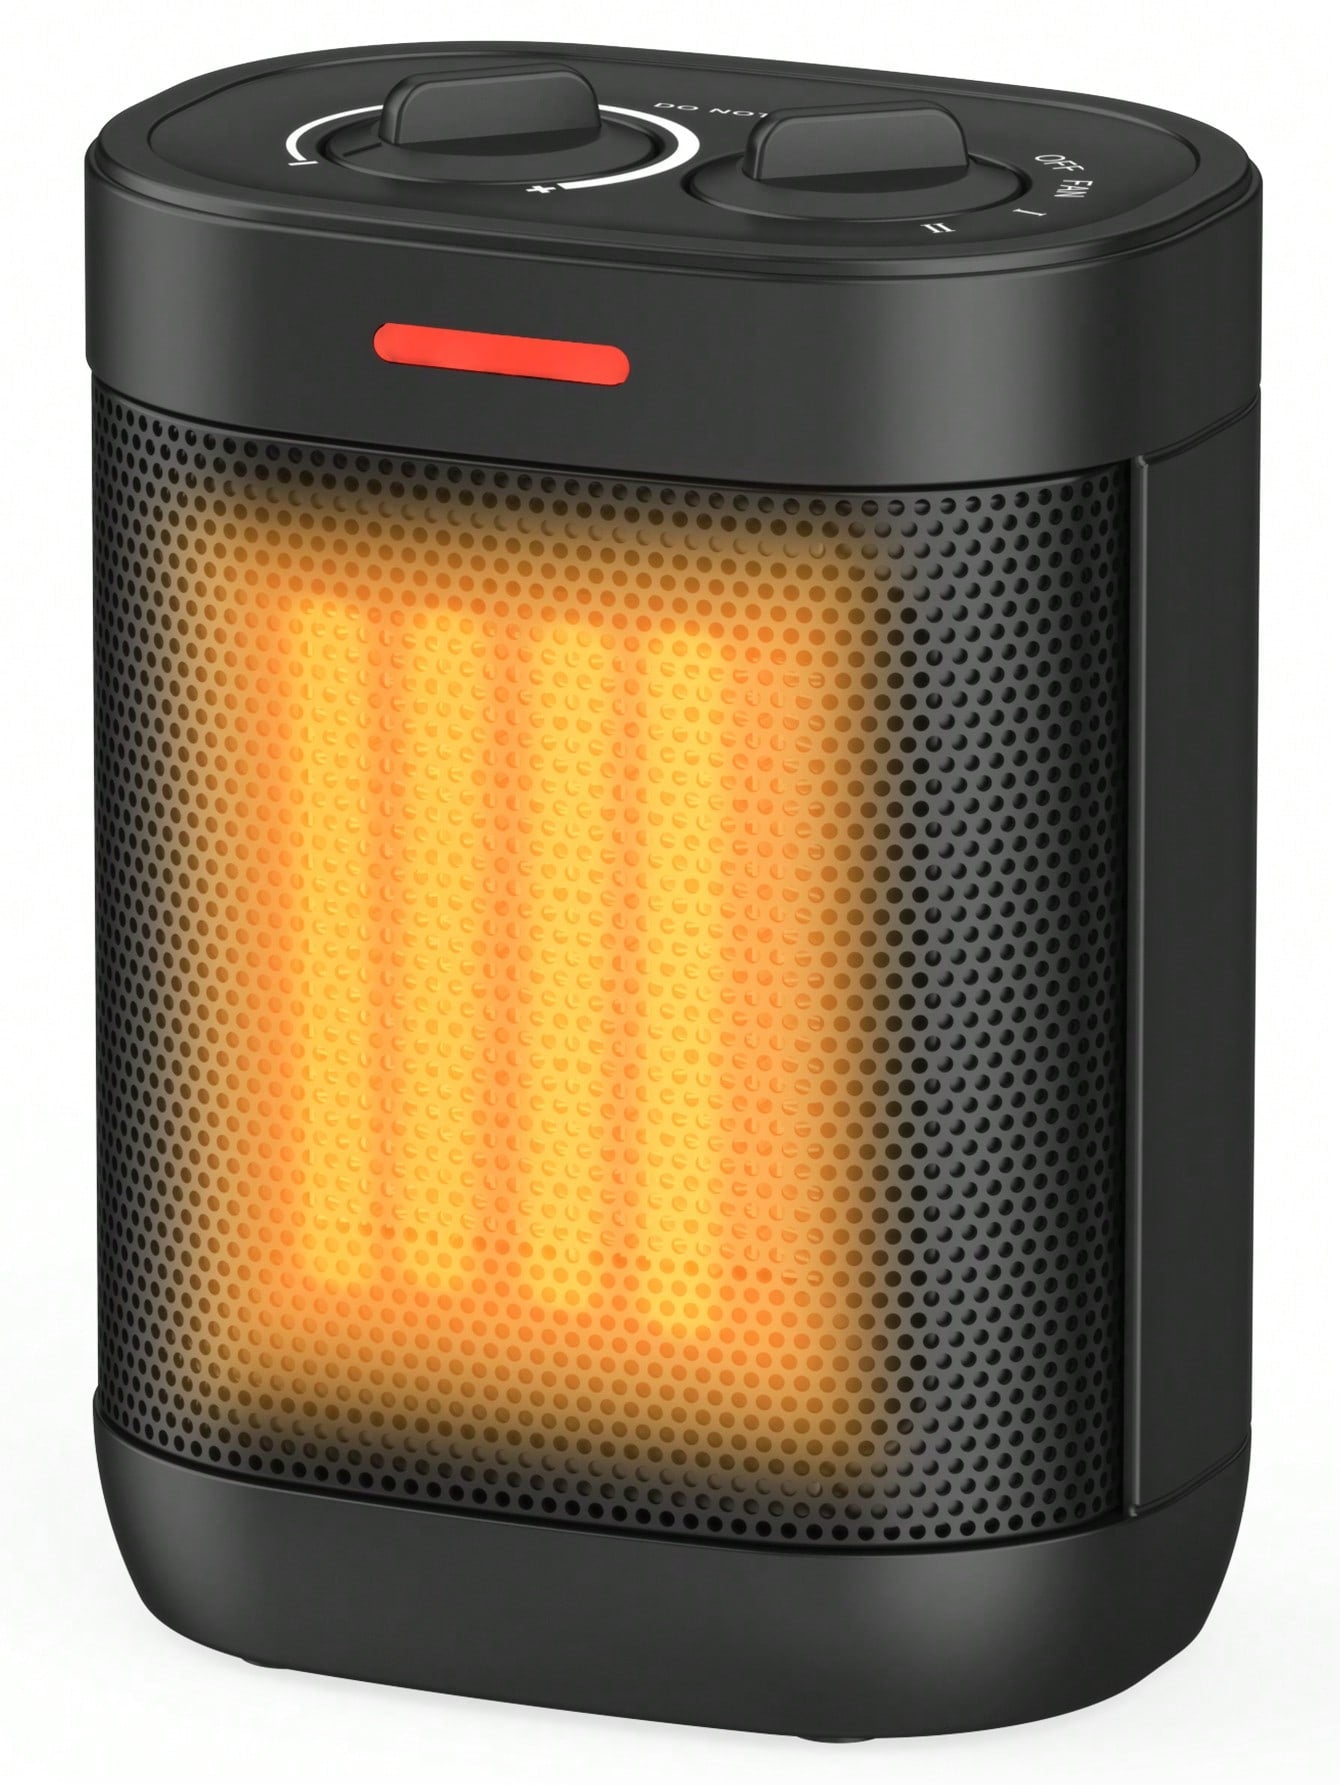 Personal Desktop Heater